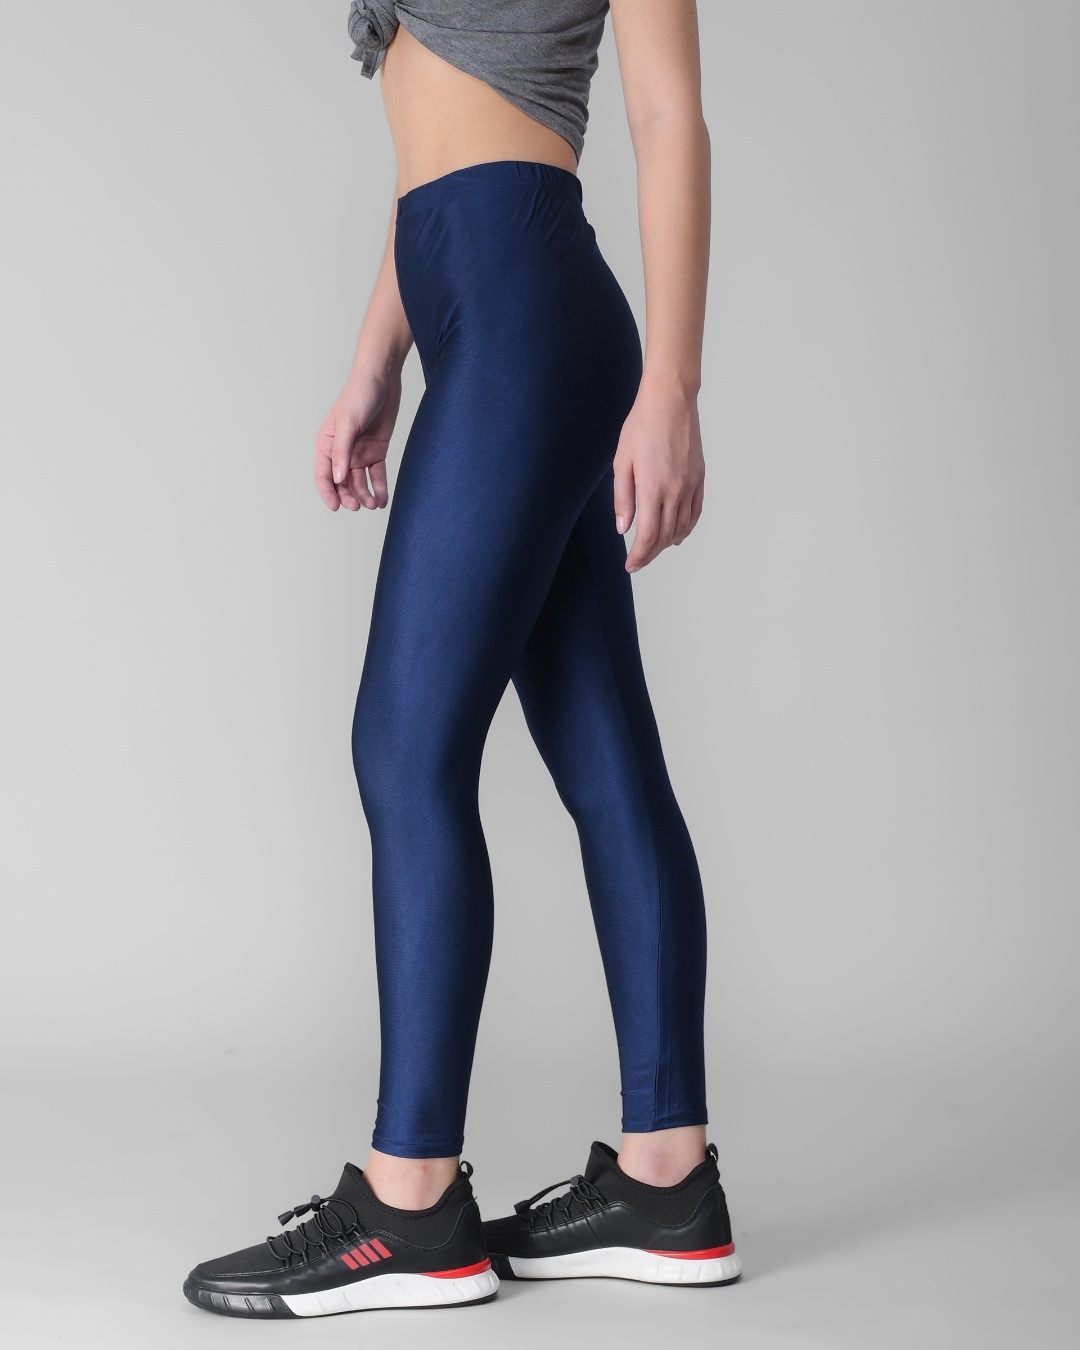 Shop Women's Blue Skinny Fit Tights-Design